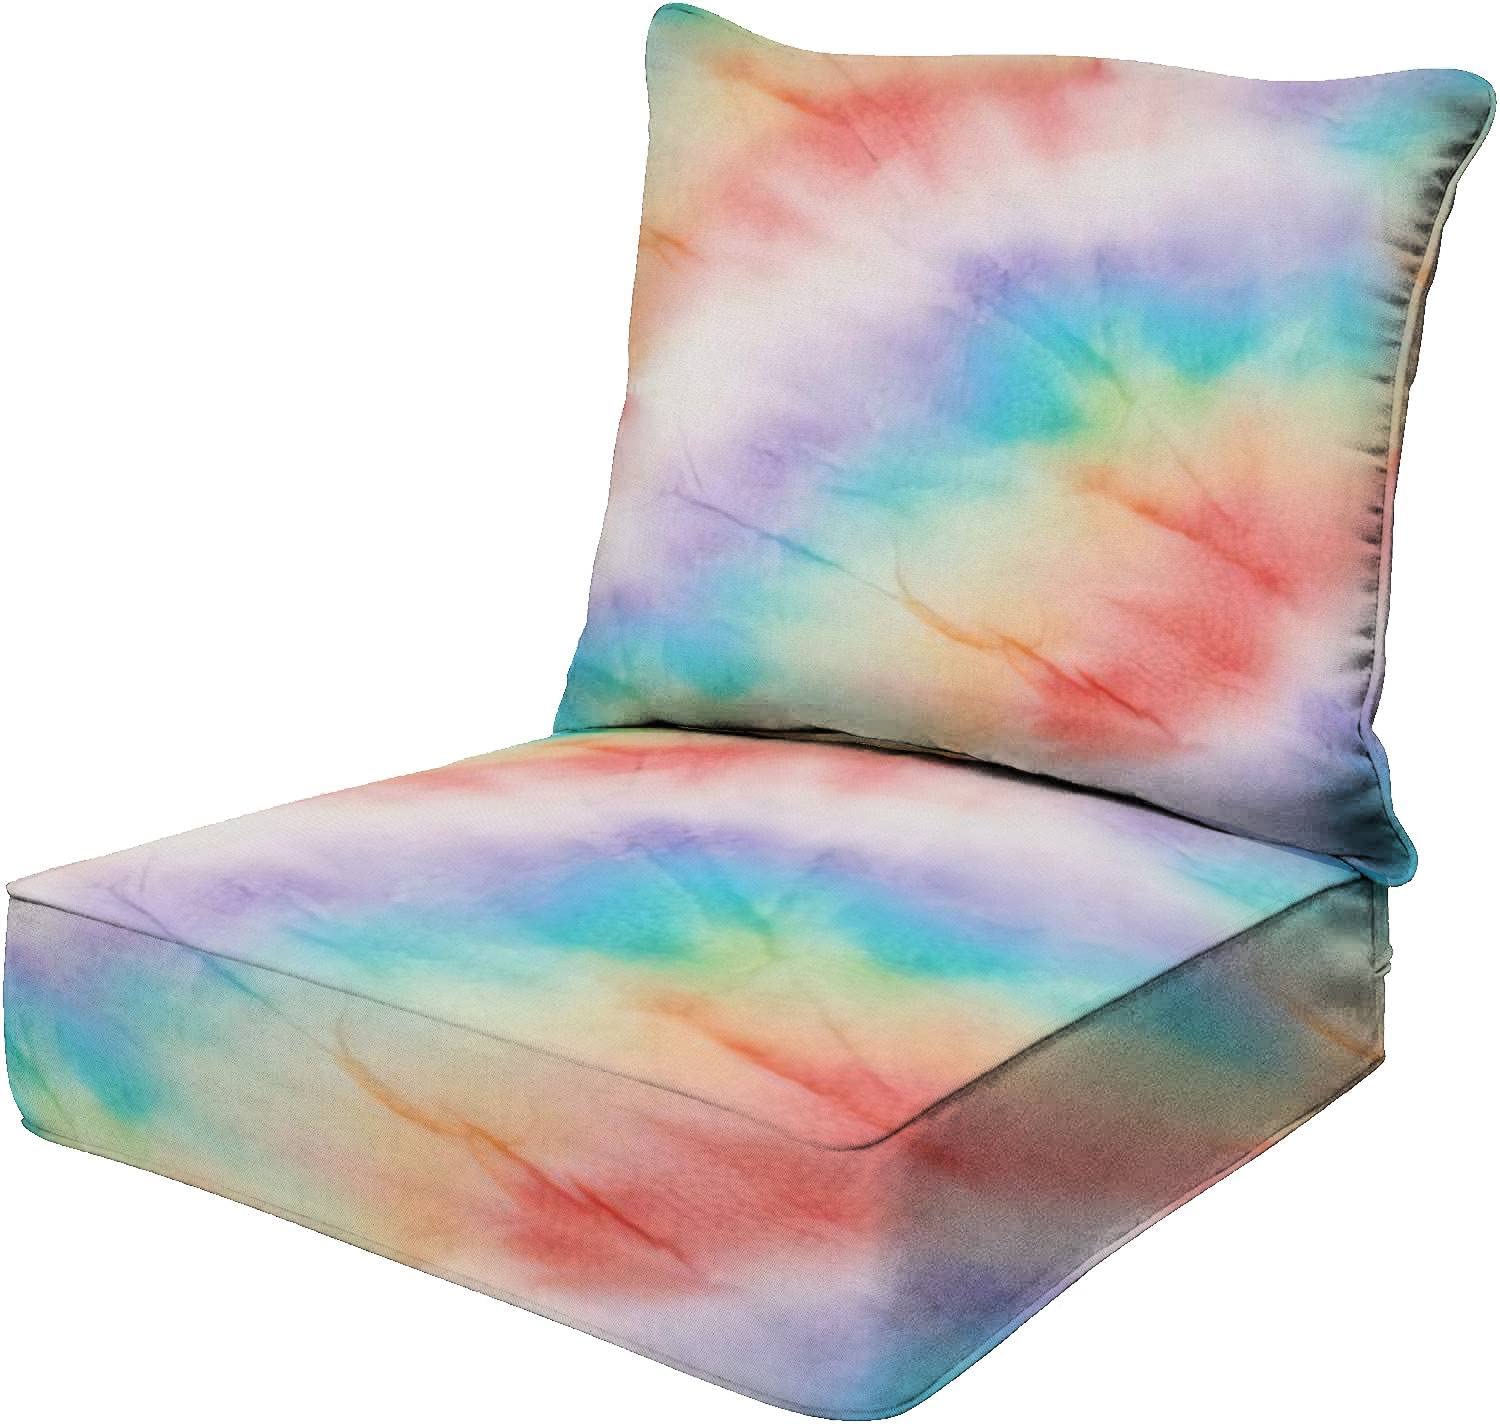 How To Dye Seat Cushions